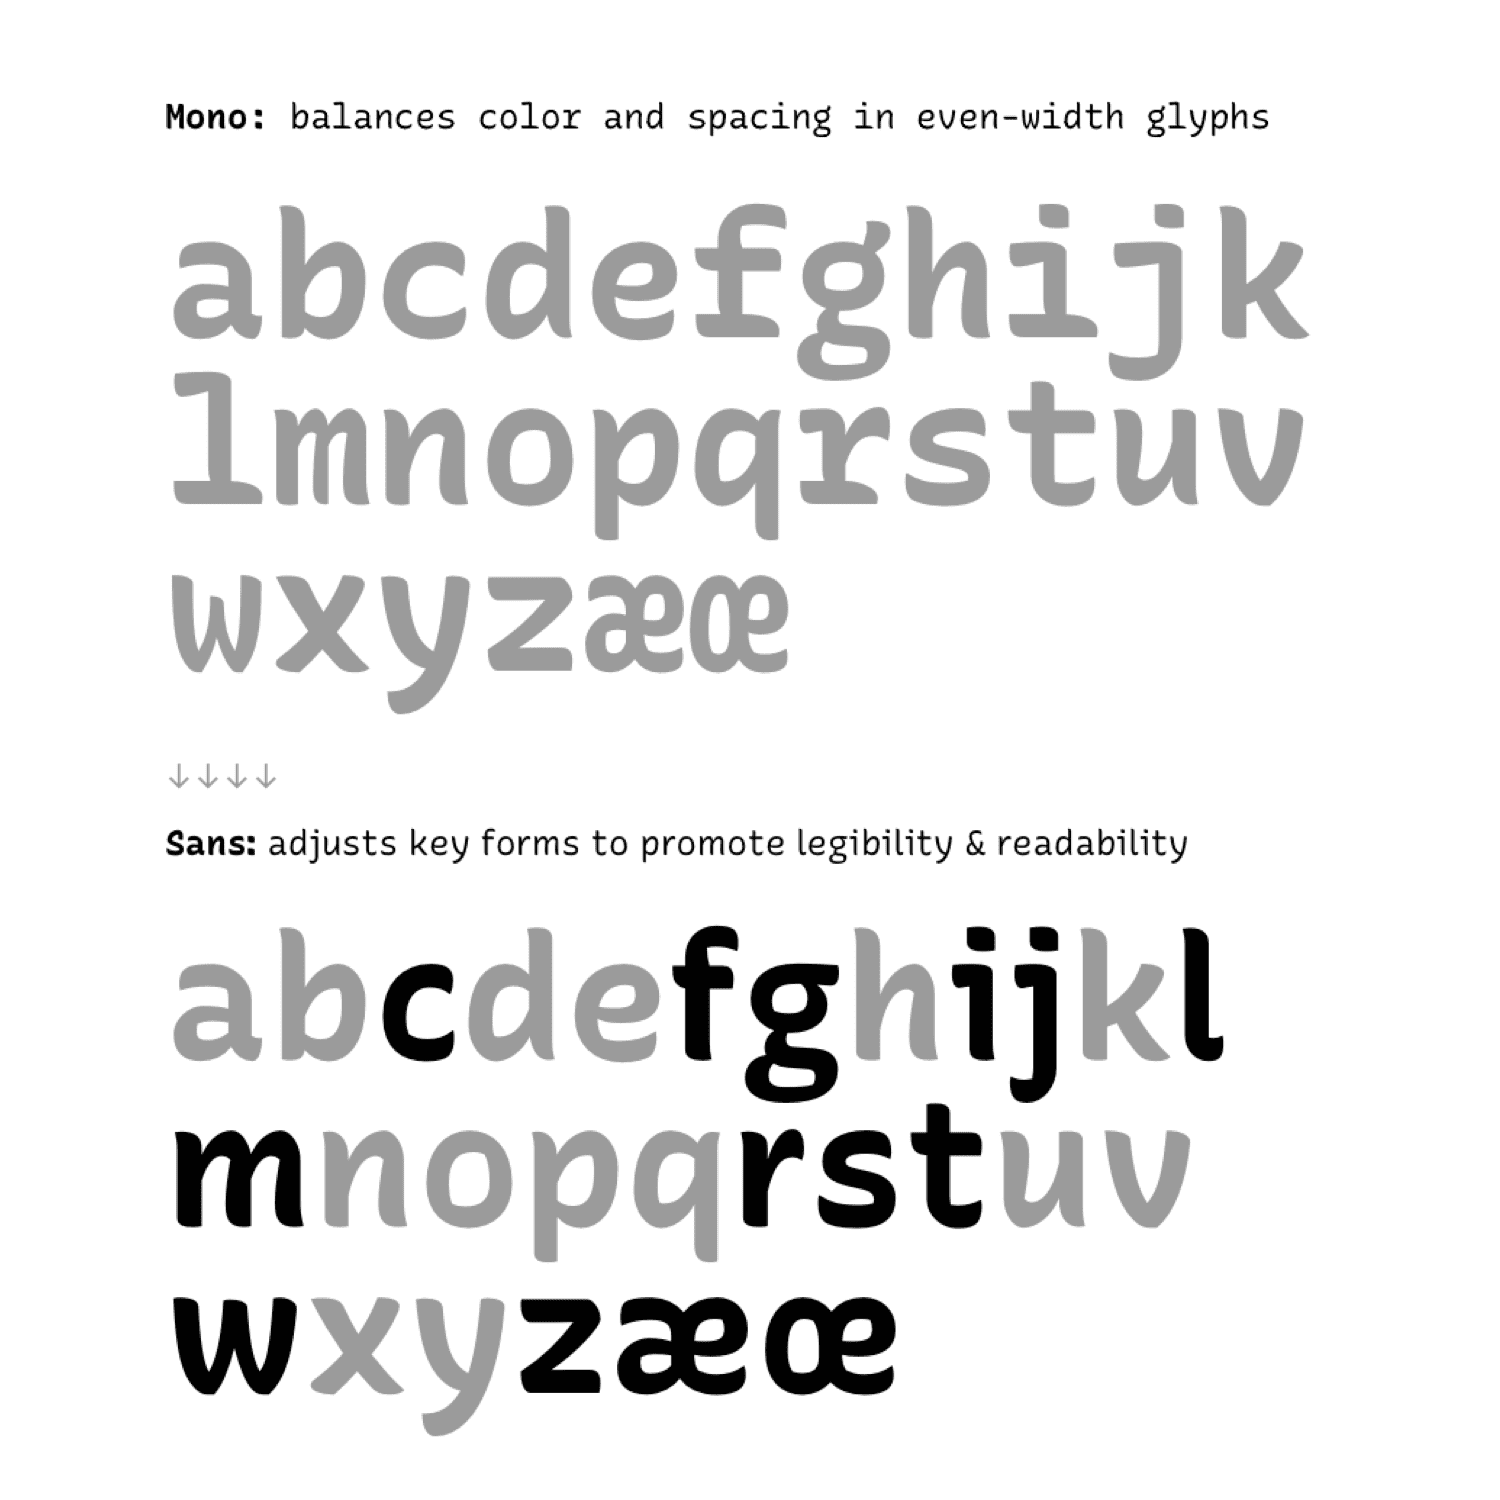 letters borrowed between recursive mono & sans, lowercase